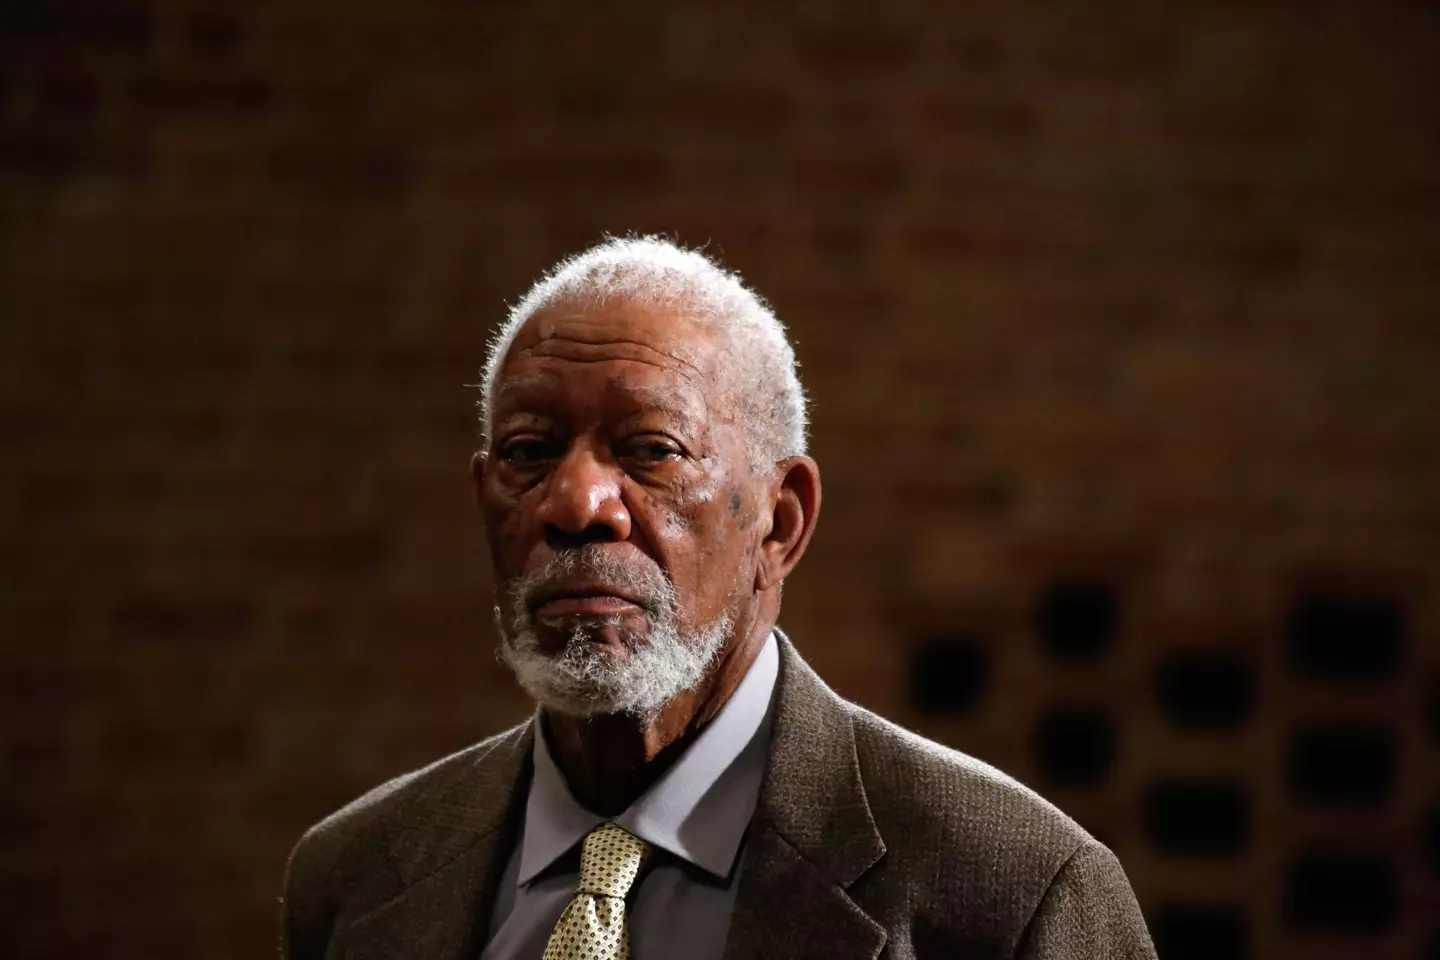 It took Morgan Freeman 50 years before properly reaching stardom.